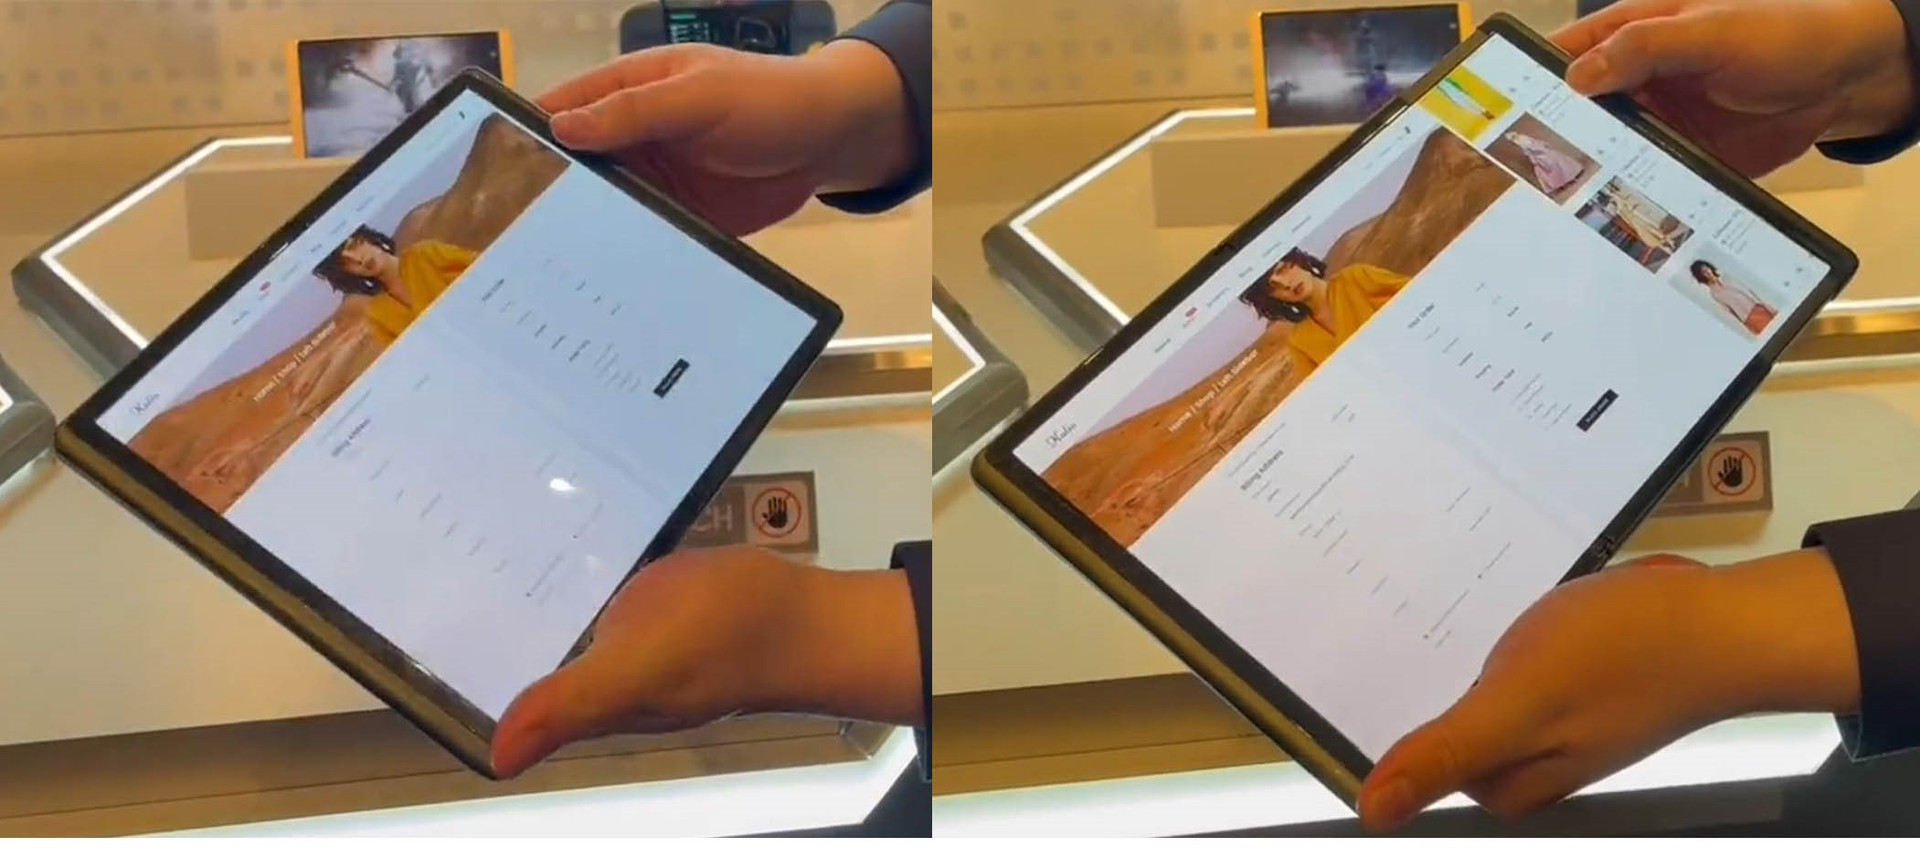 samsung-flex-hybrid-tablet.jpg